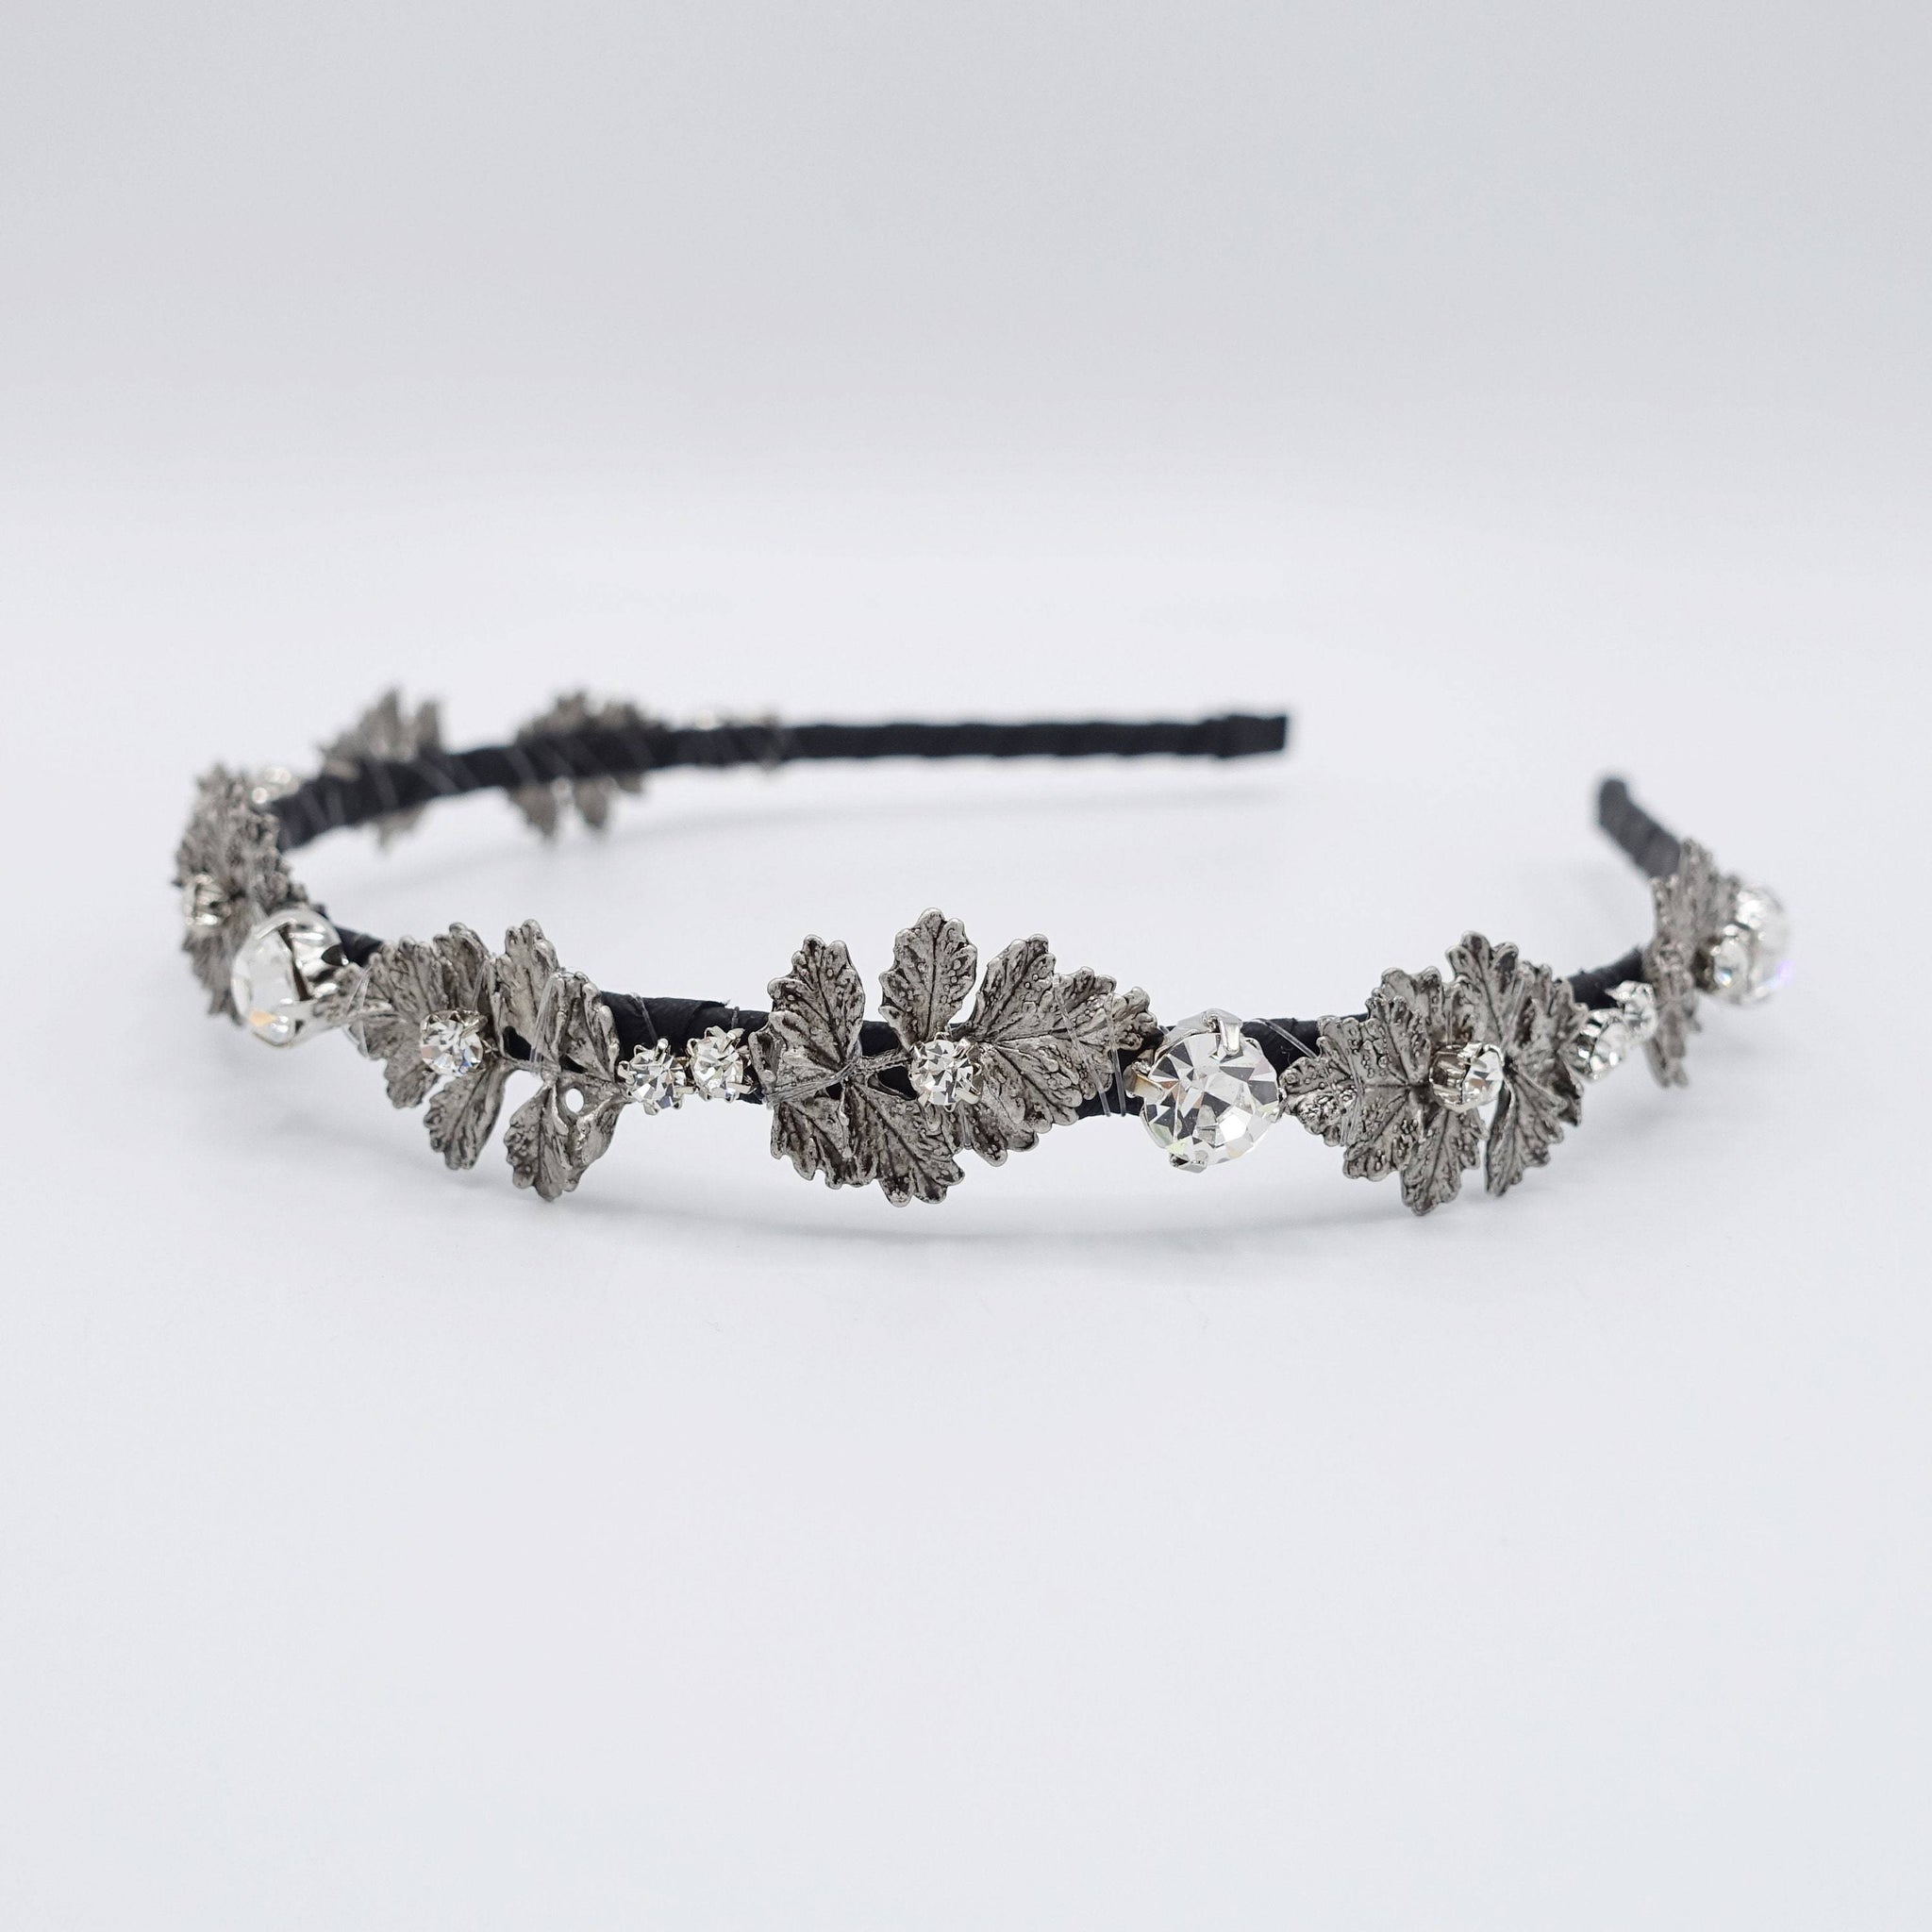 VeryShine metal leaf headband rhinestone embellished thin hairband for women